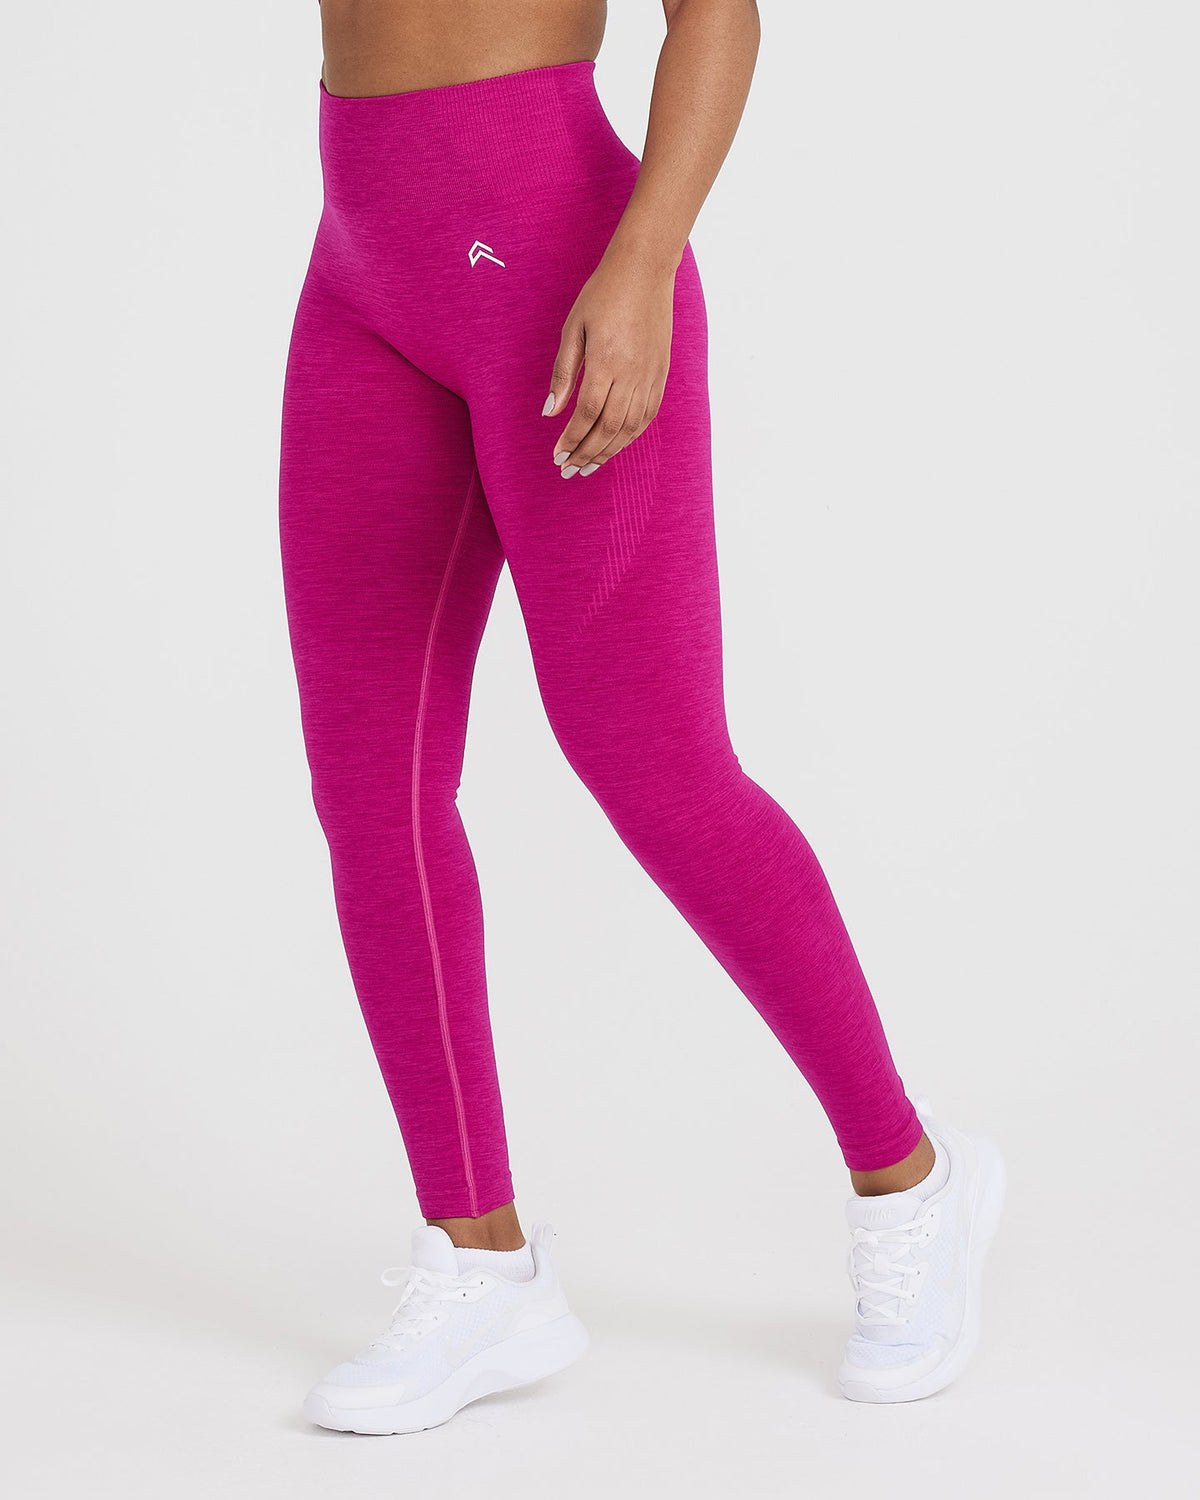 SQUATWOLF, WOMAN, Core Agile Leggings - Berry Pink, Size - Medium - Veli  store